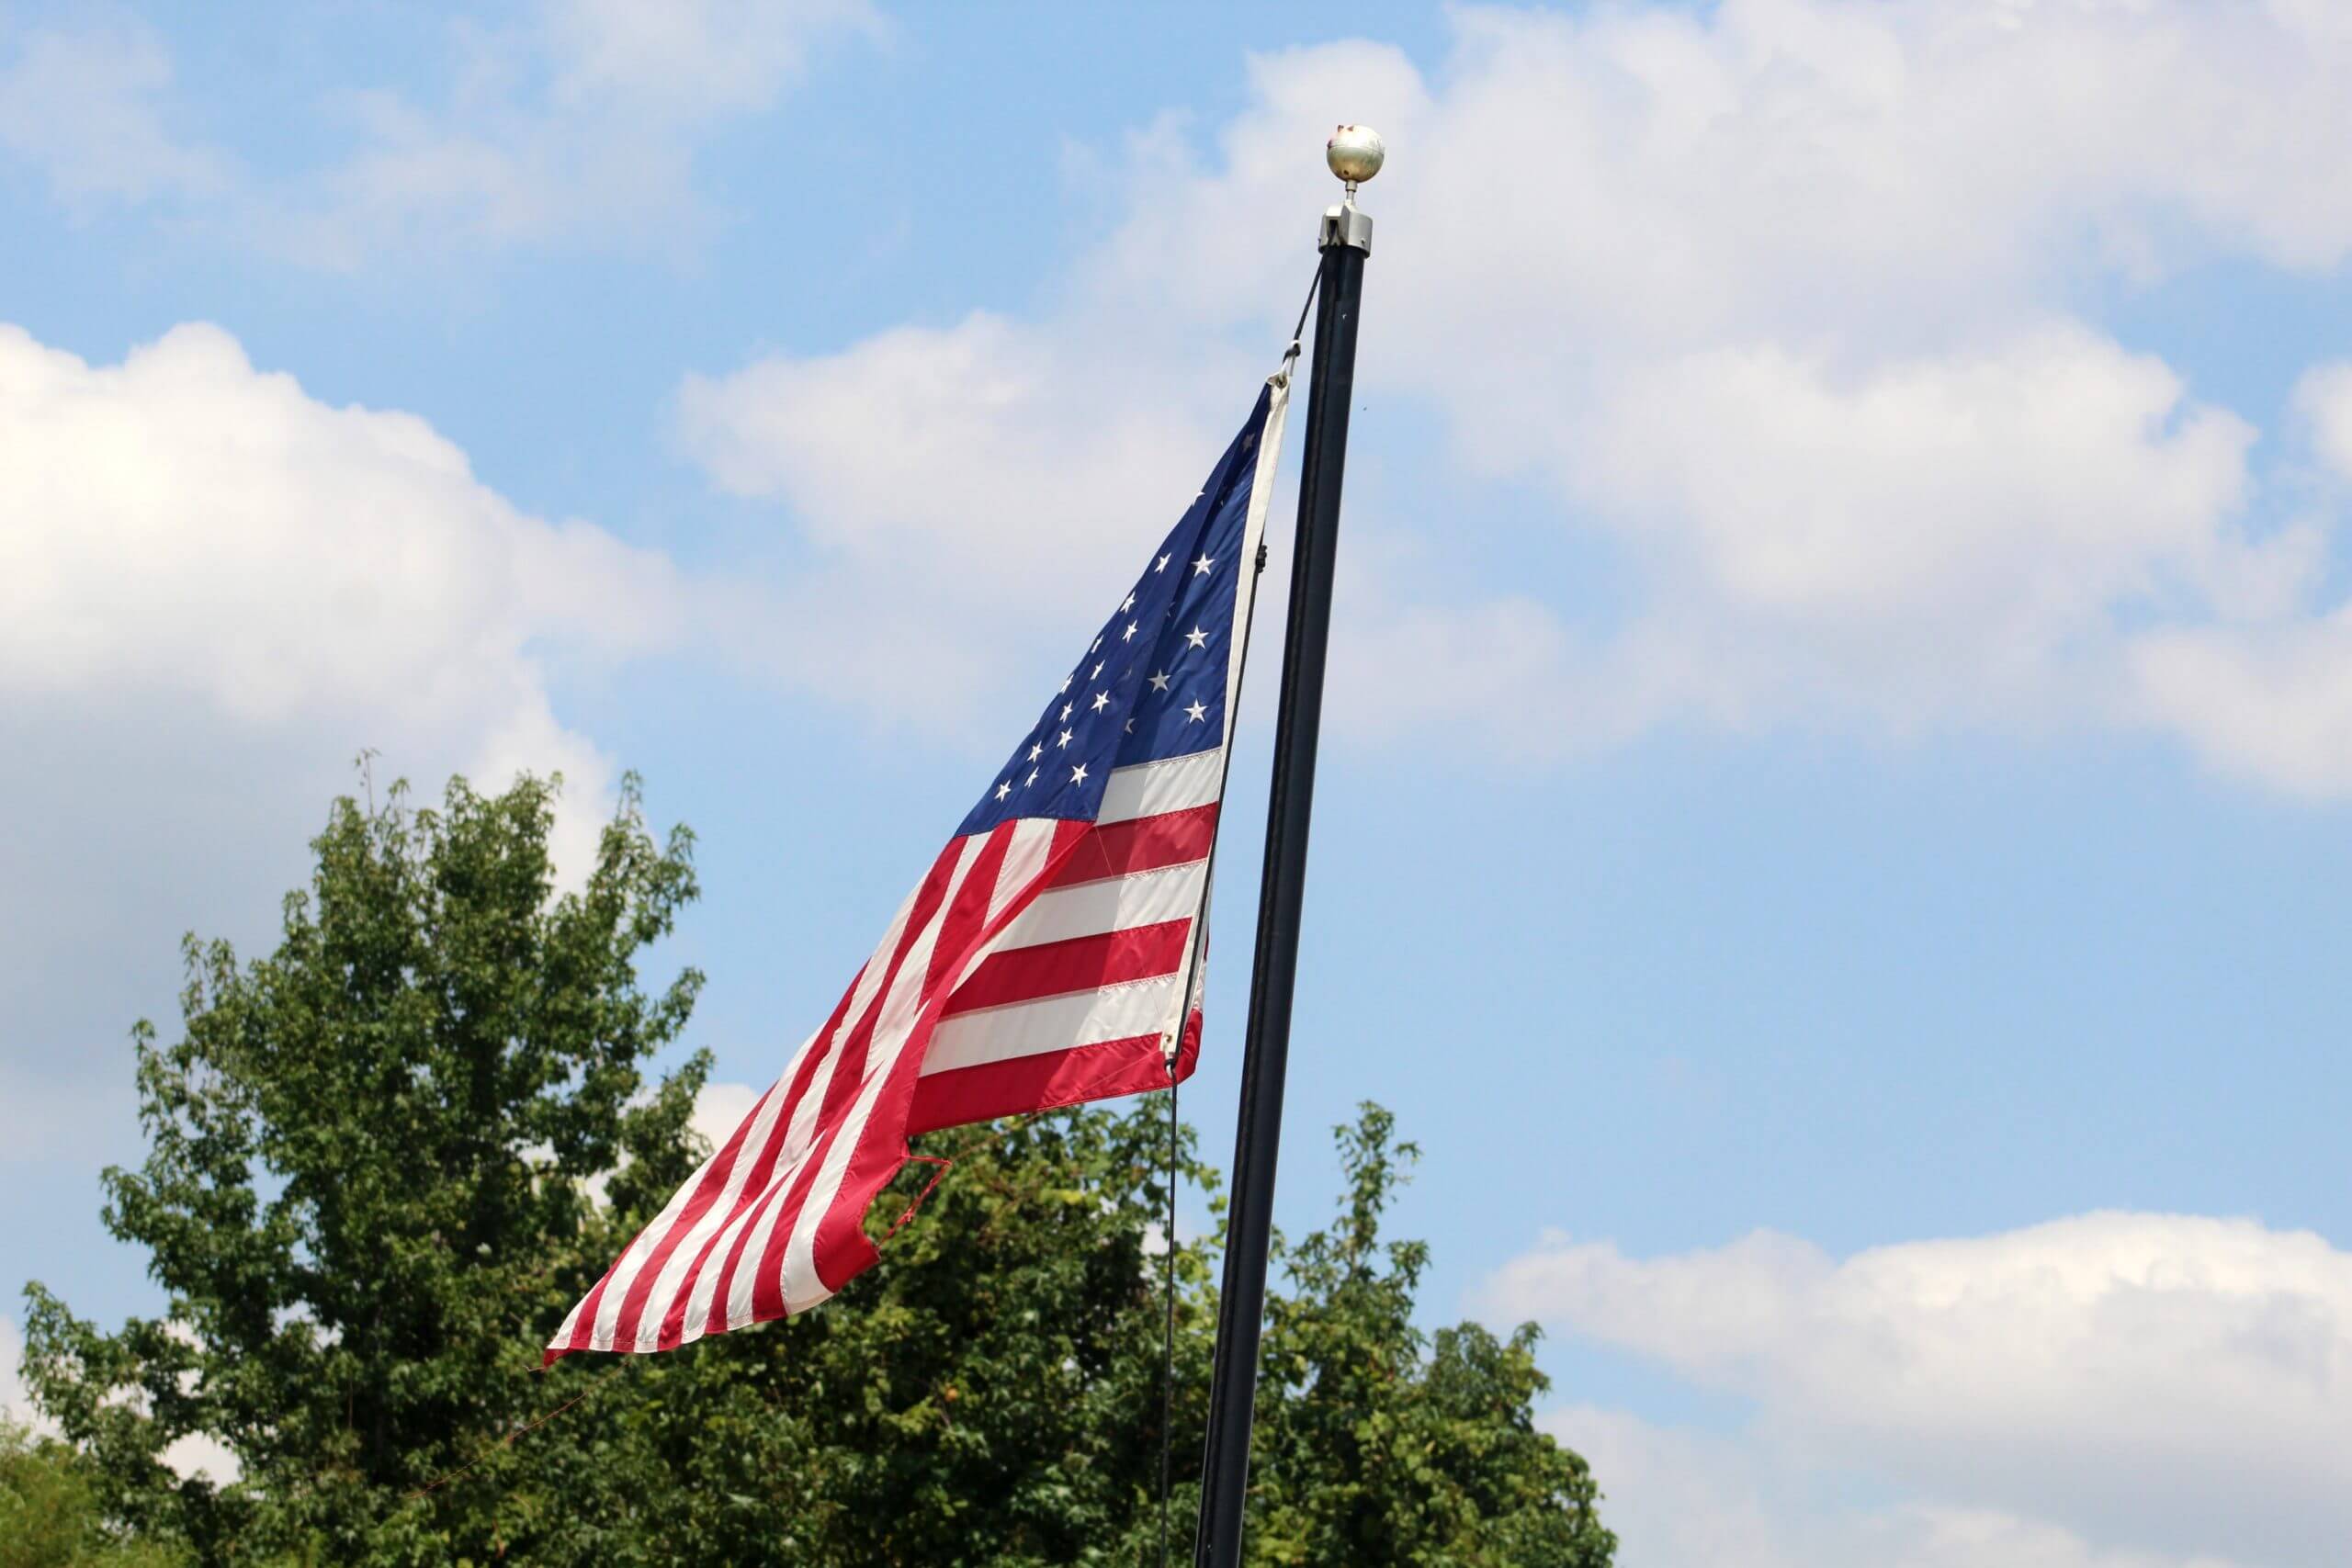 Sen. Bob Dole passes away, flags to half-staff